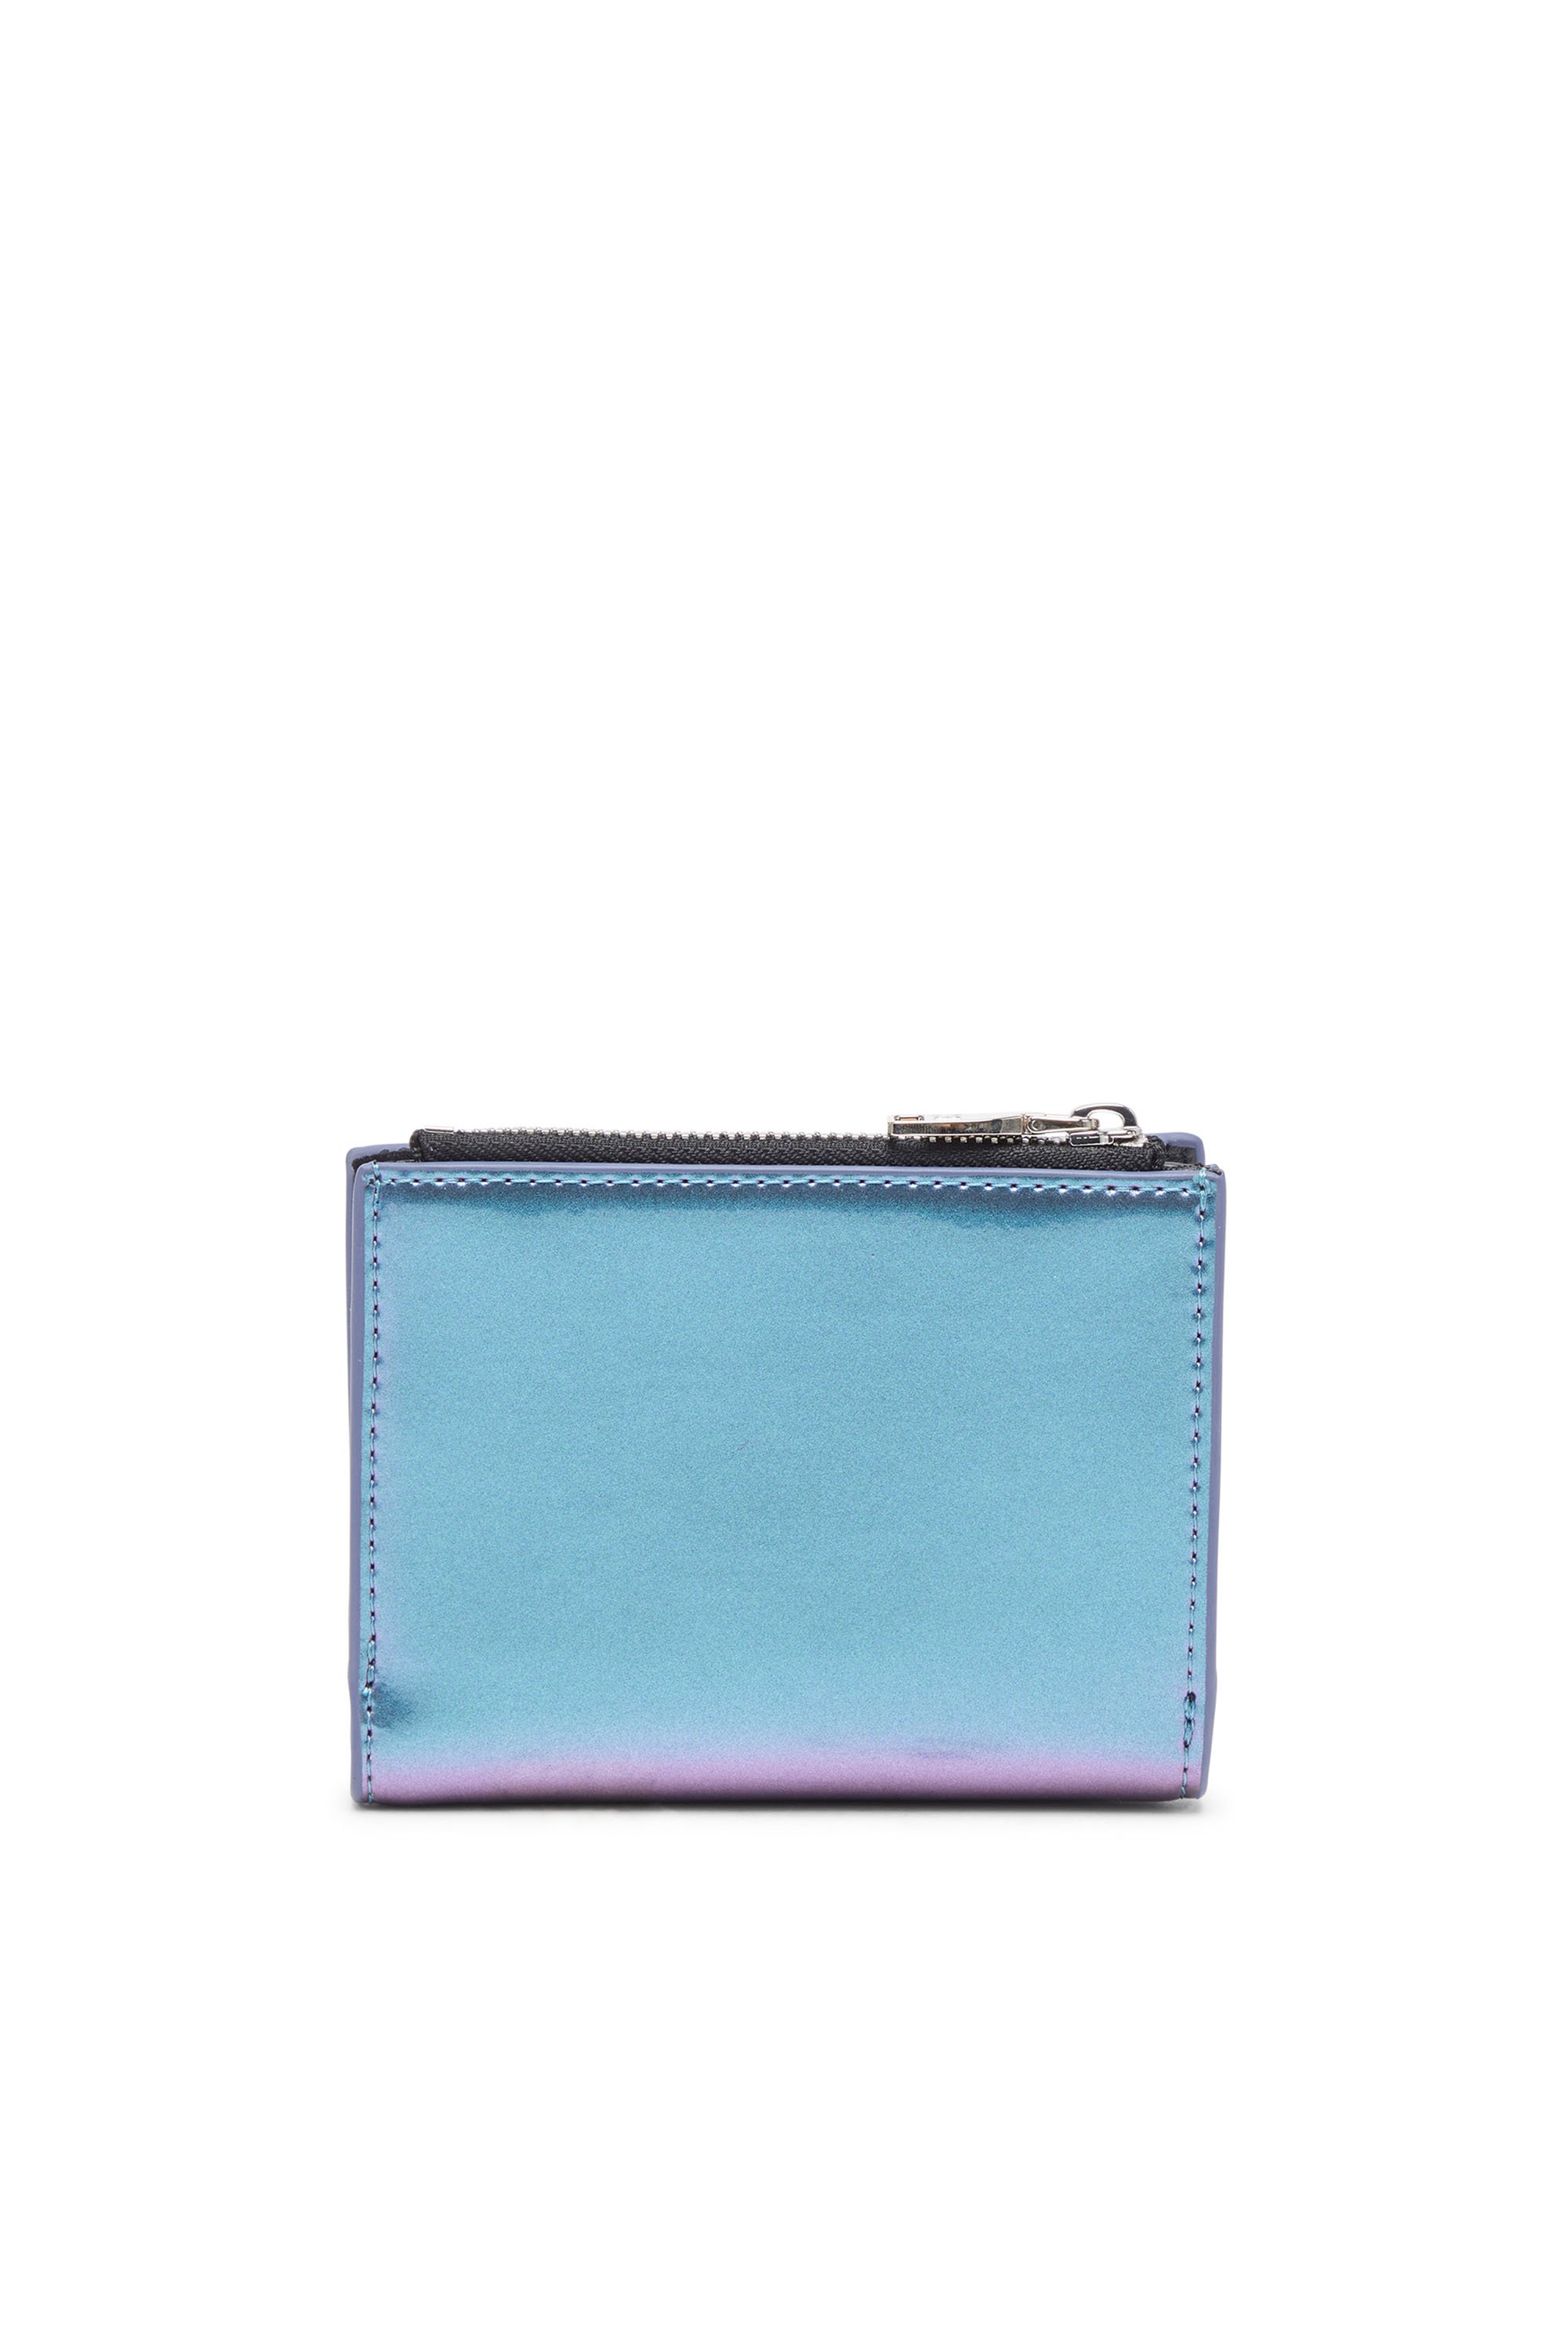 Diesel - 1DR BI-FOLD ZIP II, Woman Small iridescent wallet in Blue - Image 2